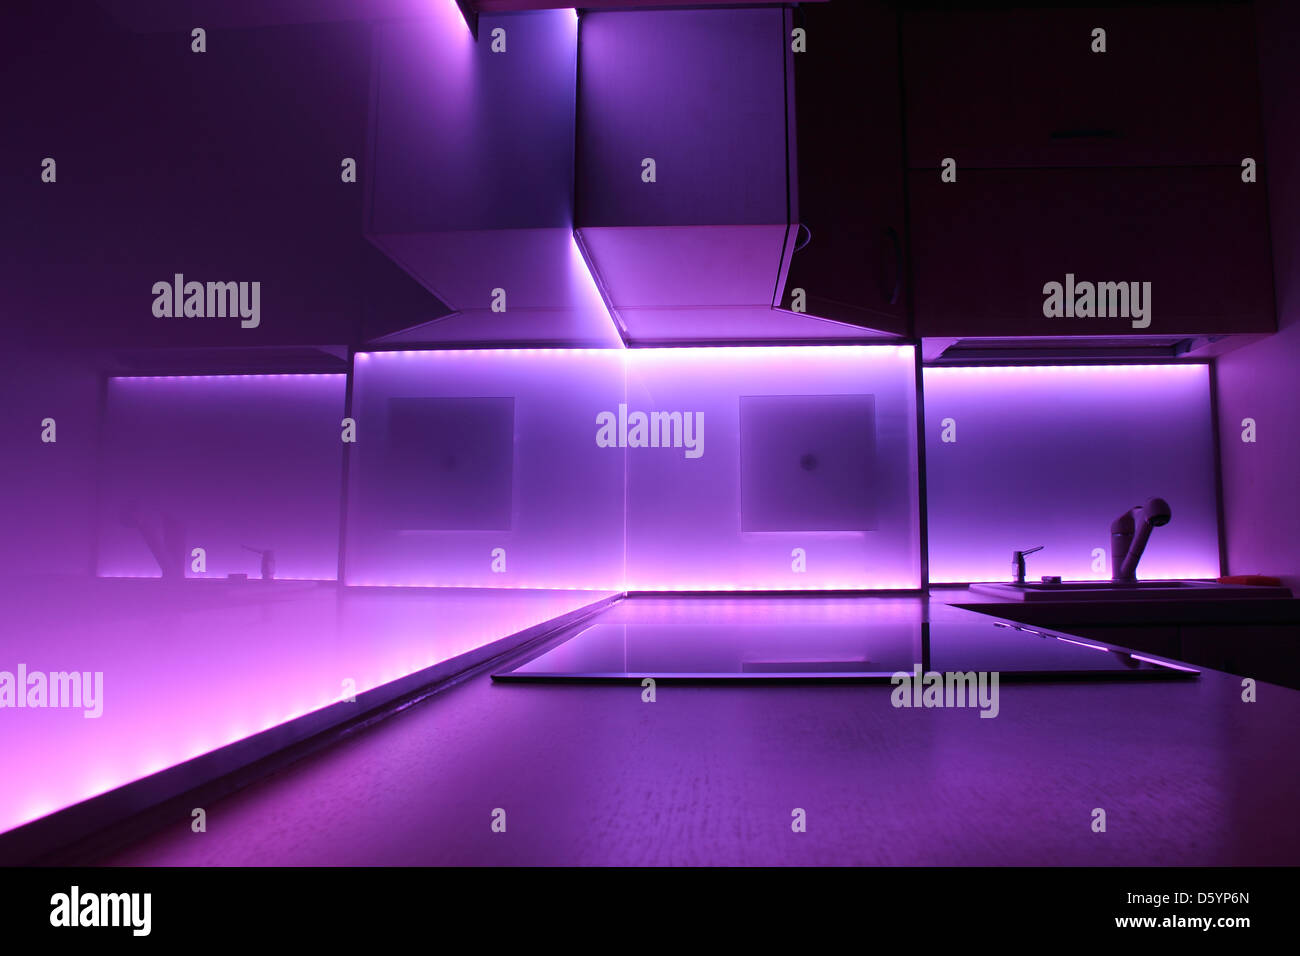 modern luxury kitchen with purple led lighting Stock Photo